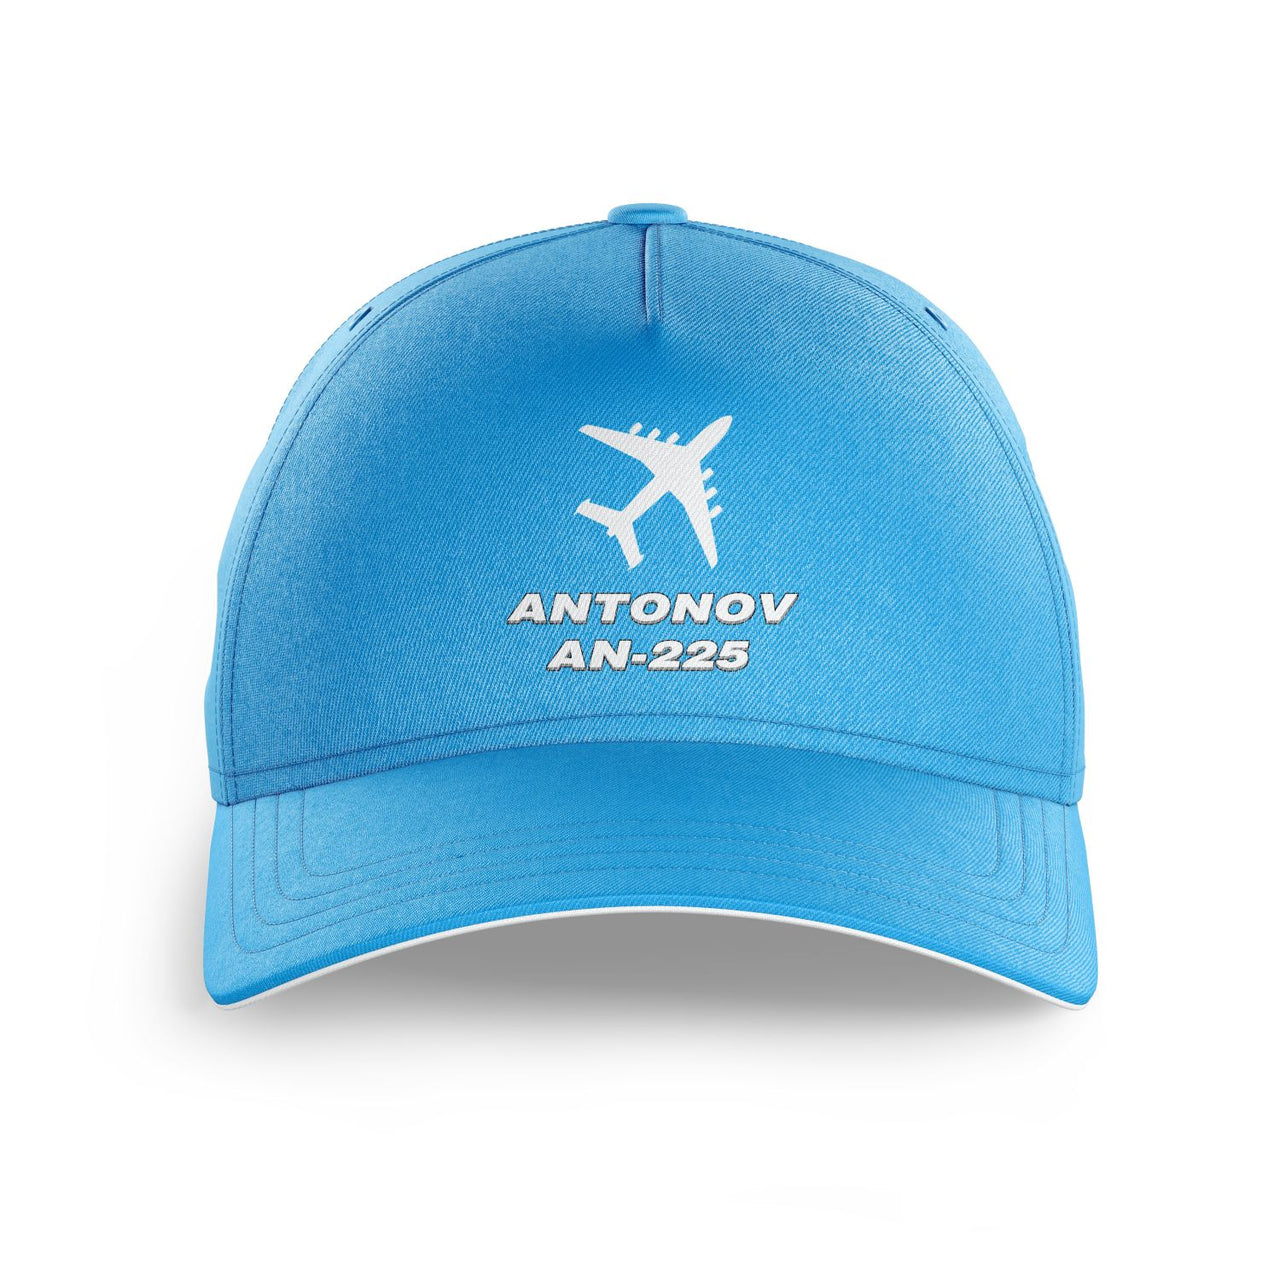 Antonov AN-225 (28) Printed Hats